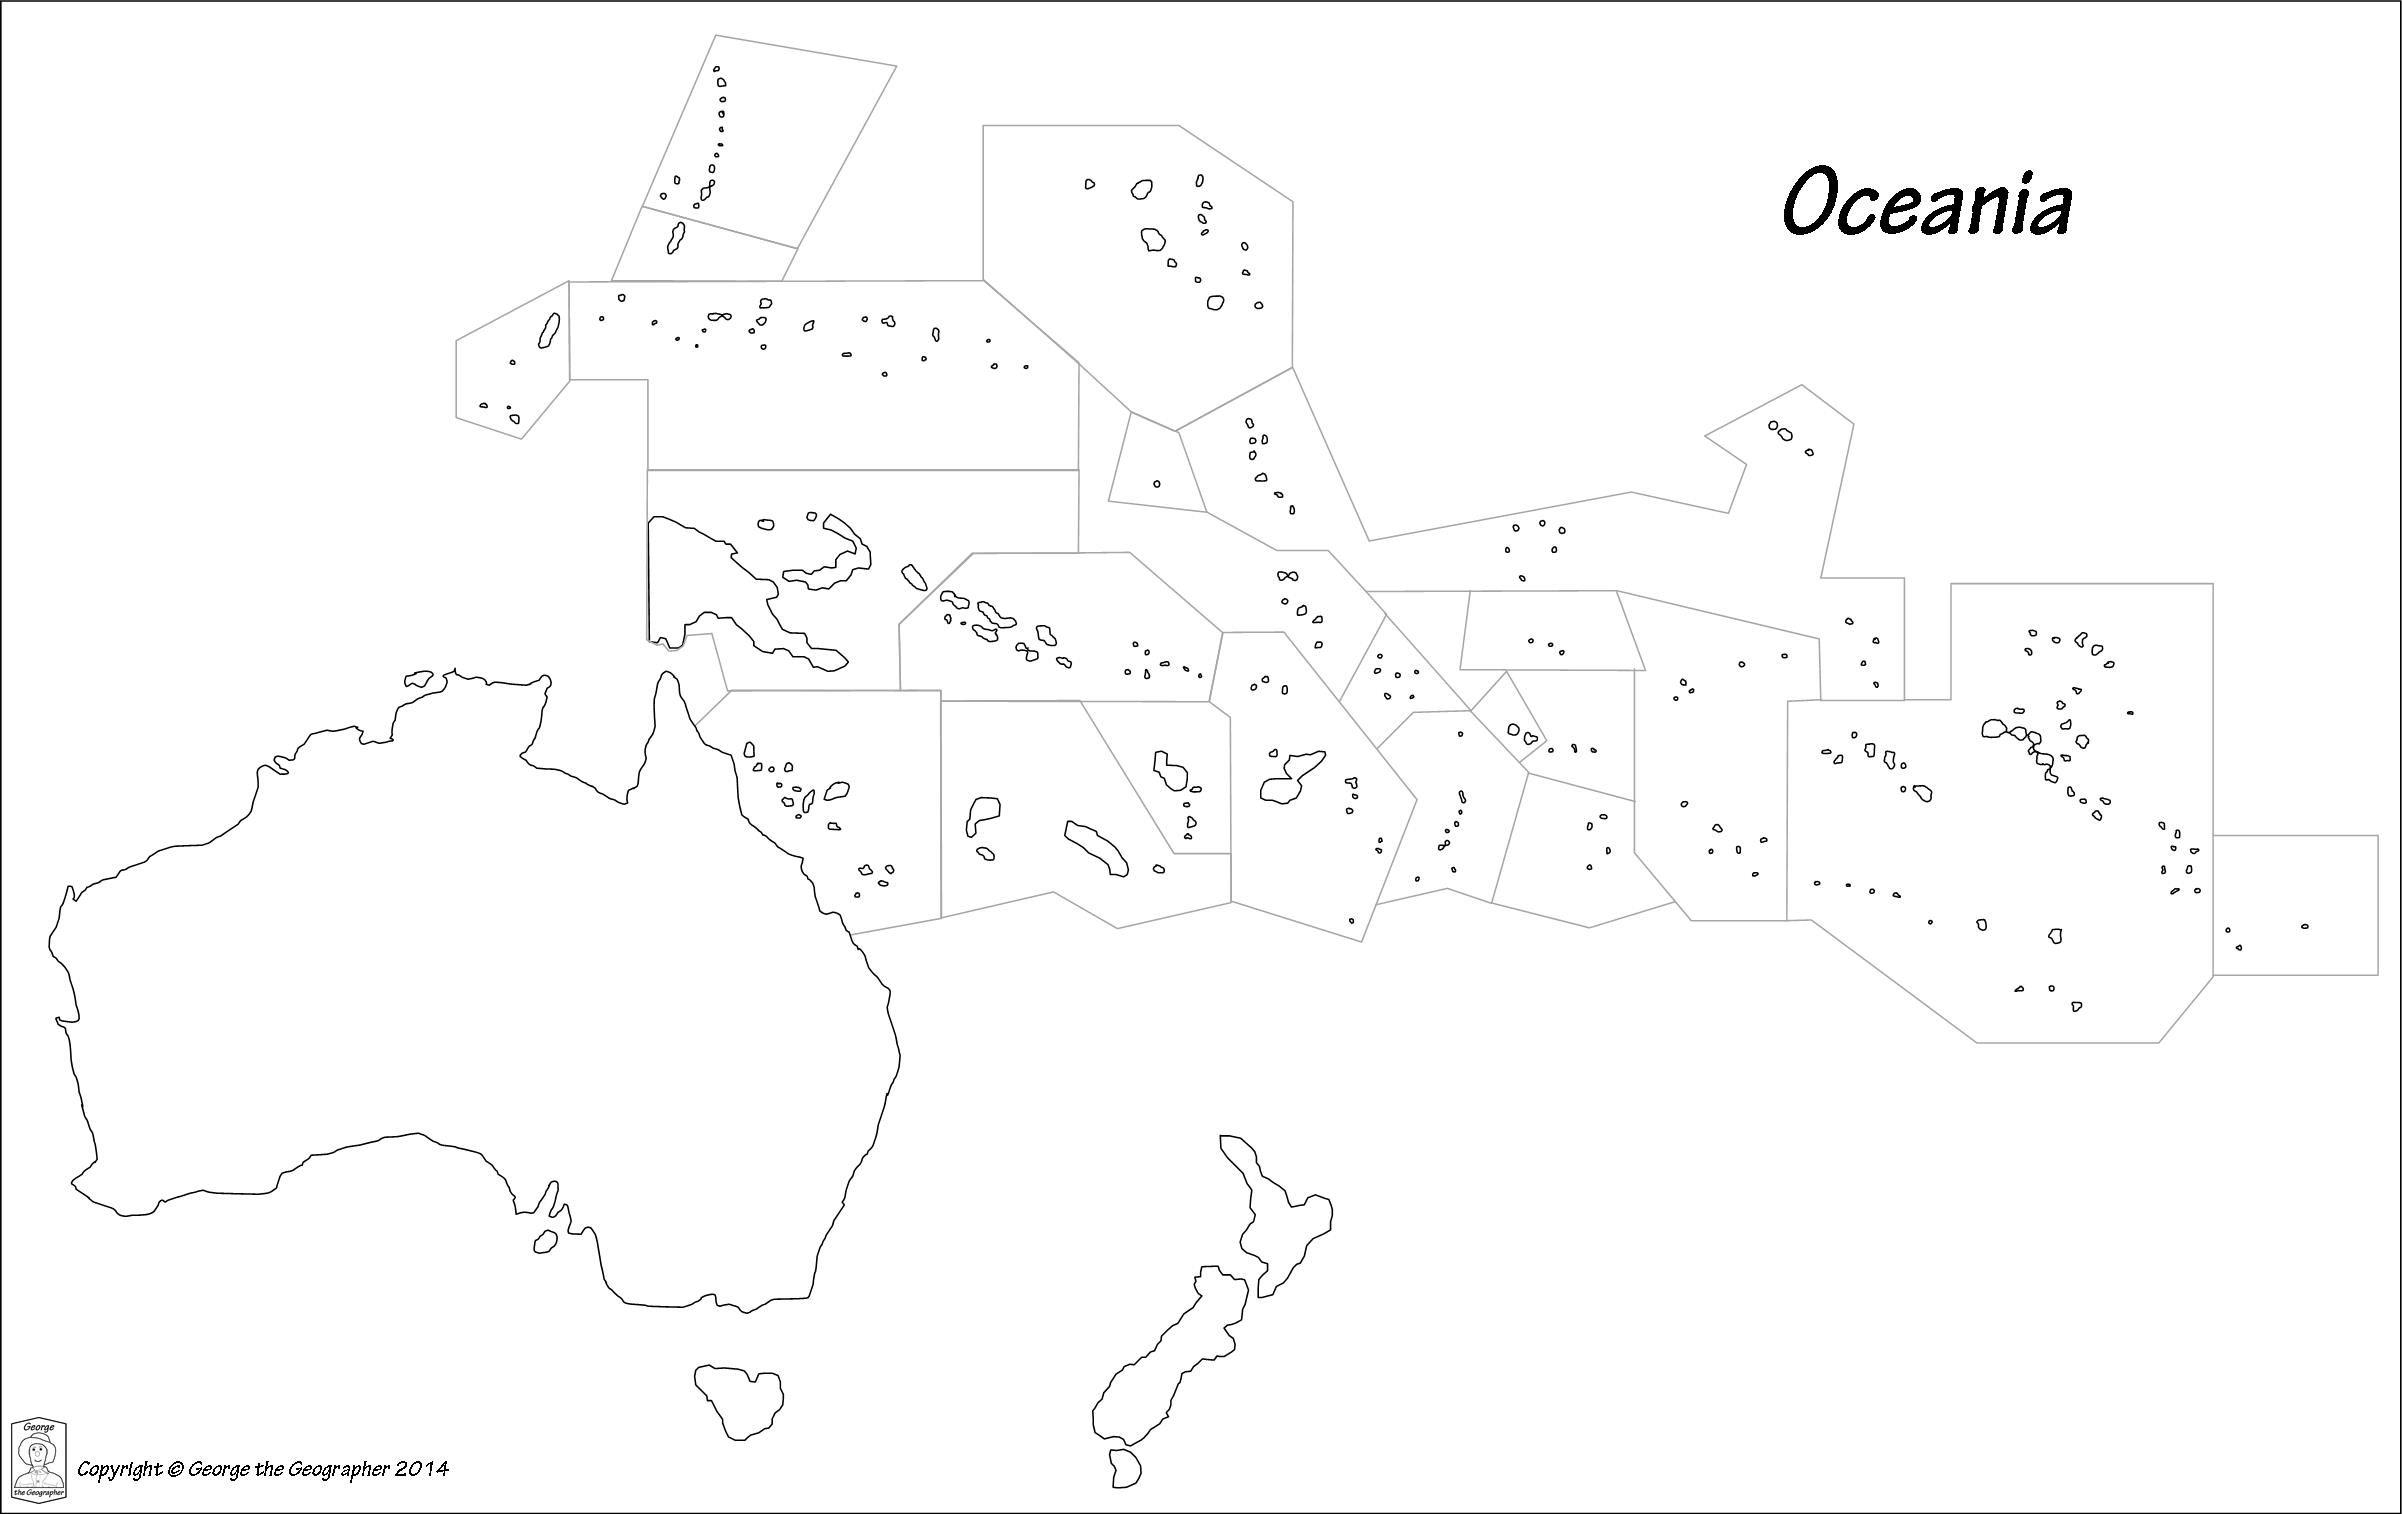 Outline base maps